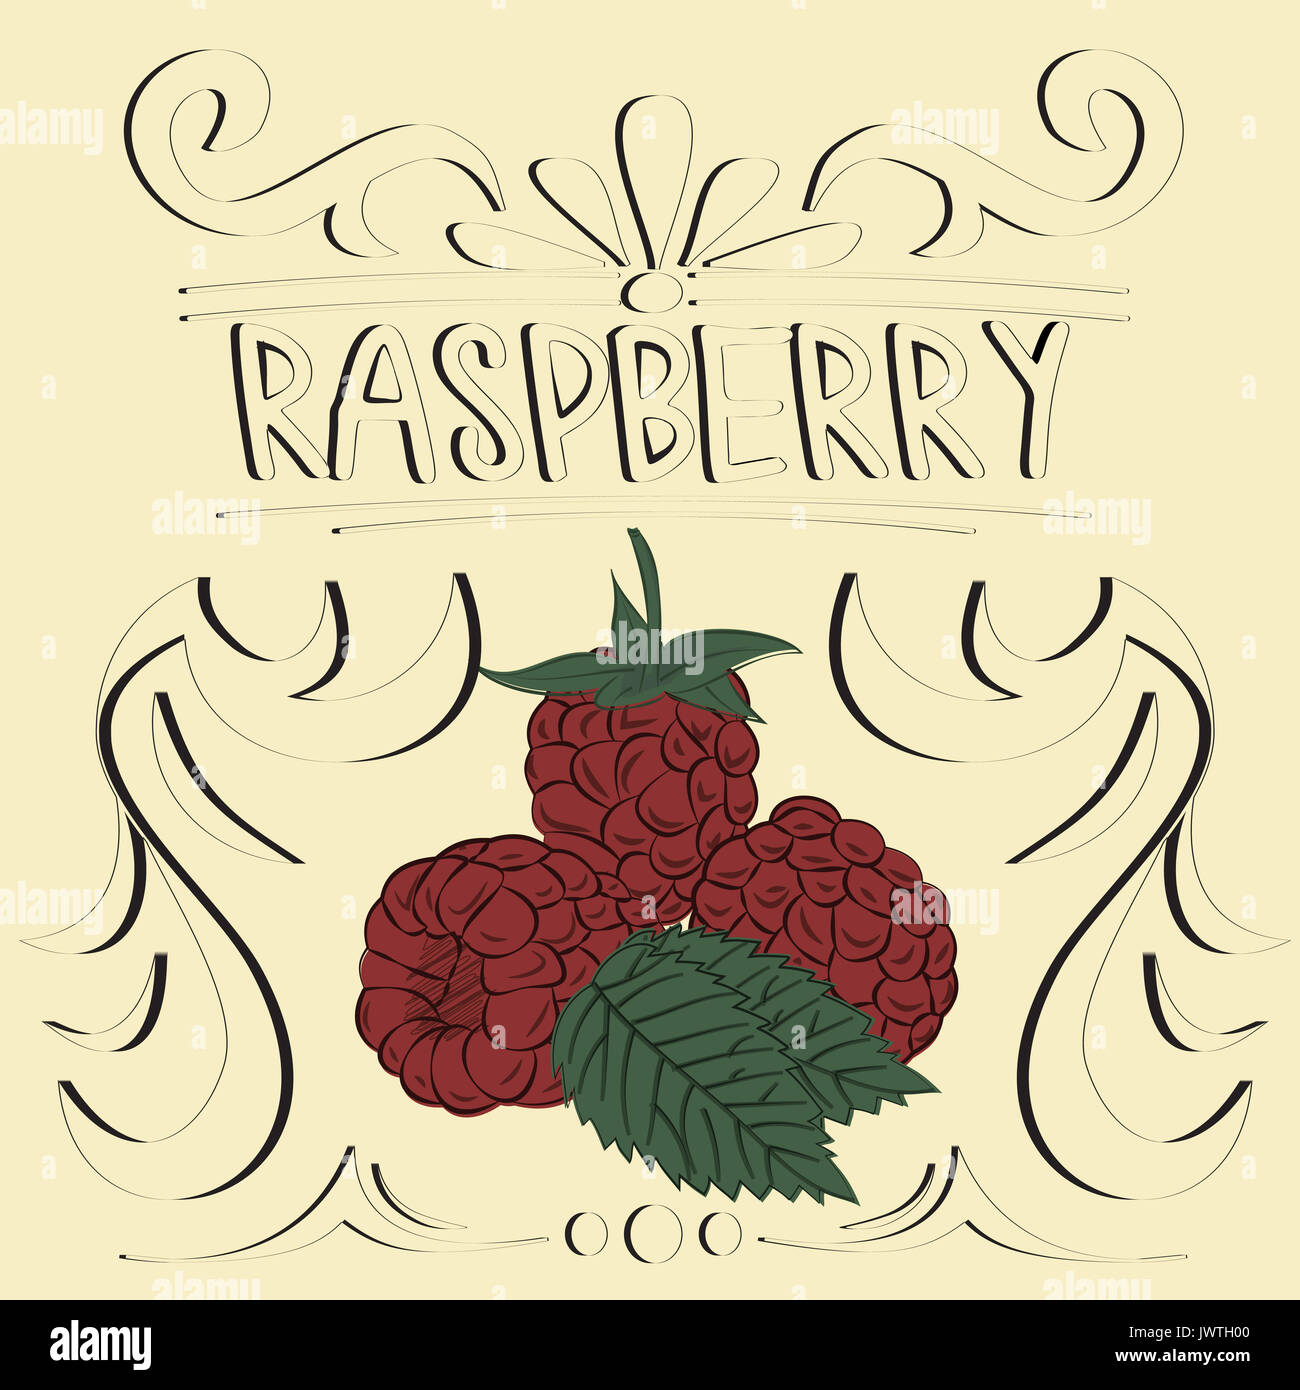 Raspberry vintage retro poster design, illustration, concept logo Stock Photo